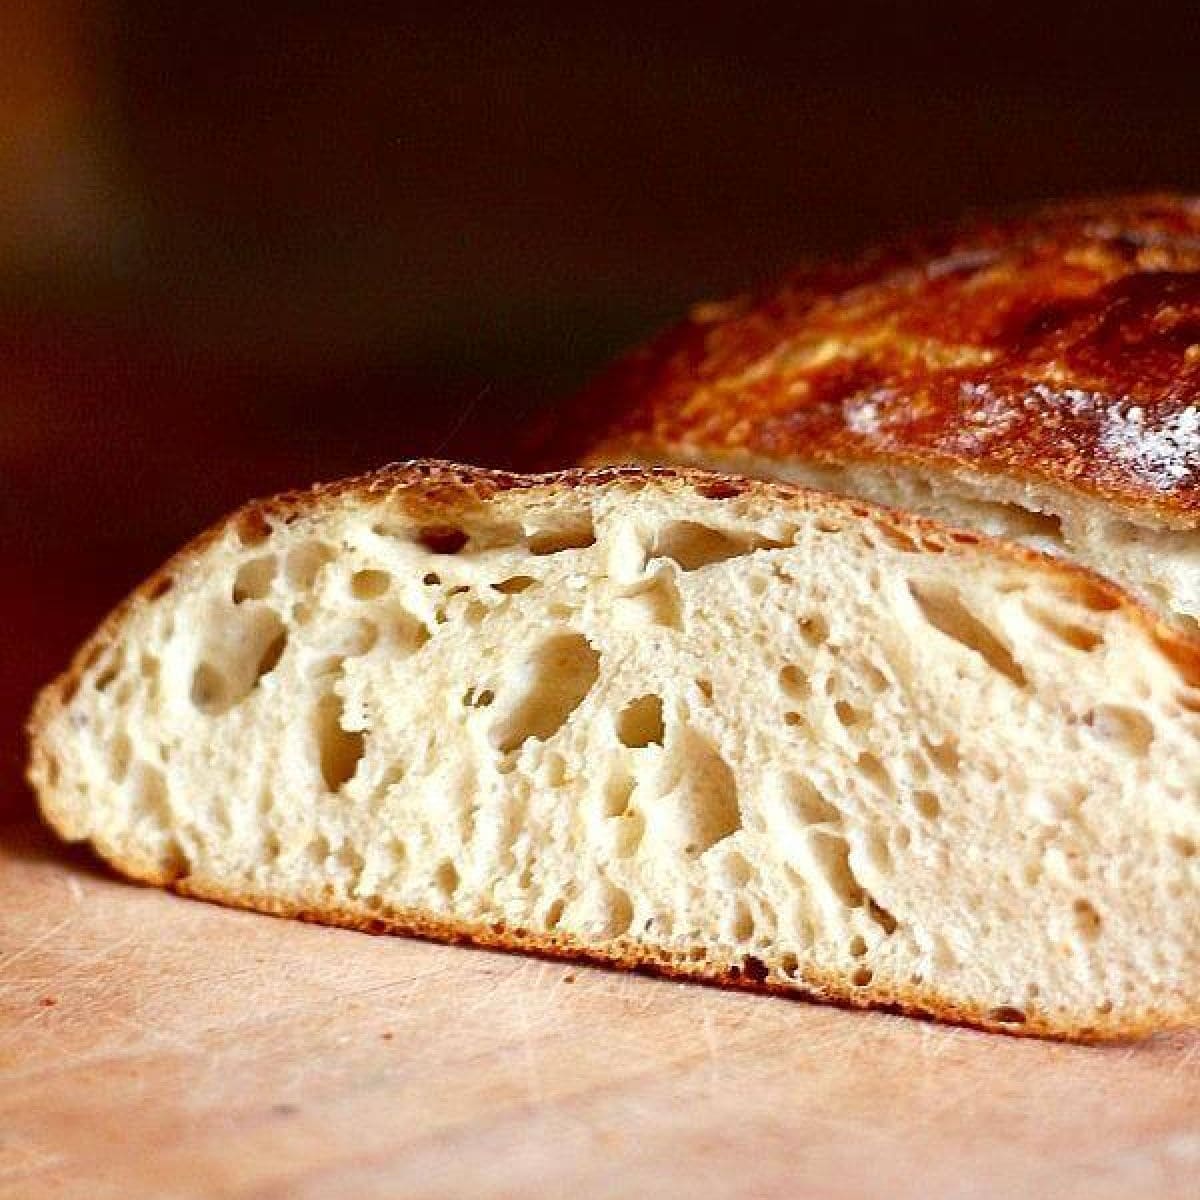 Easy No-Knead Sourdough Bread